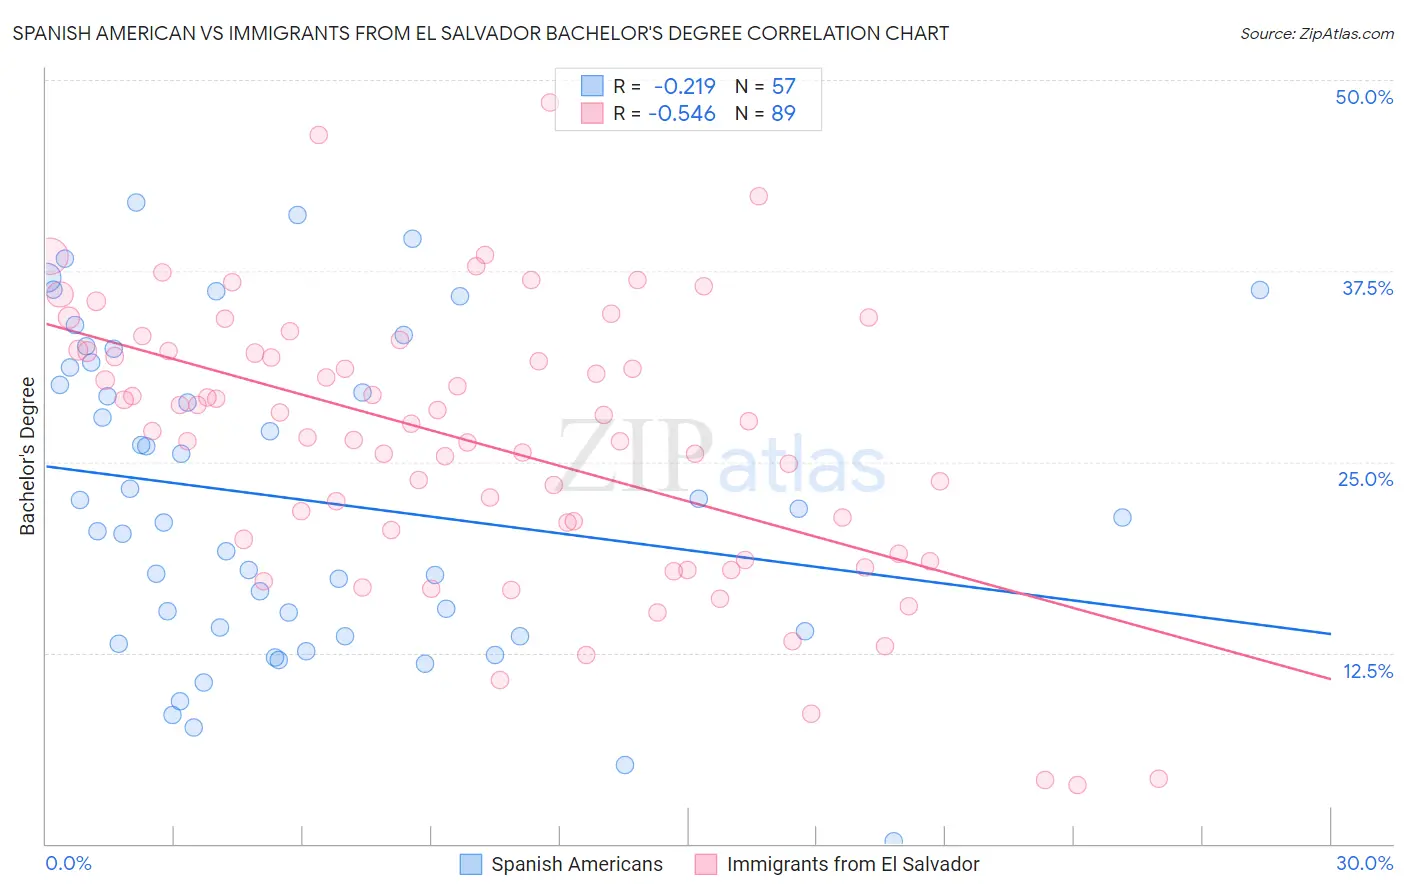 Spanish American vs Immigrants from El Salvador Bachelor's Degree